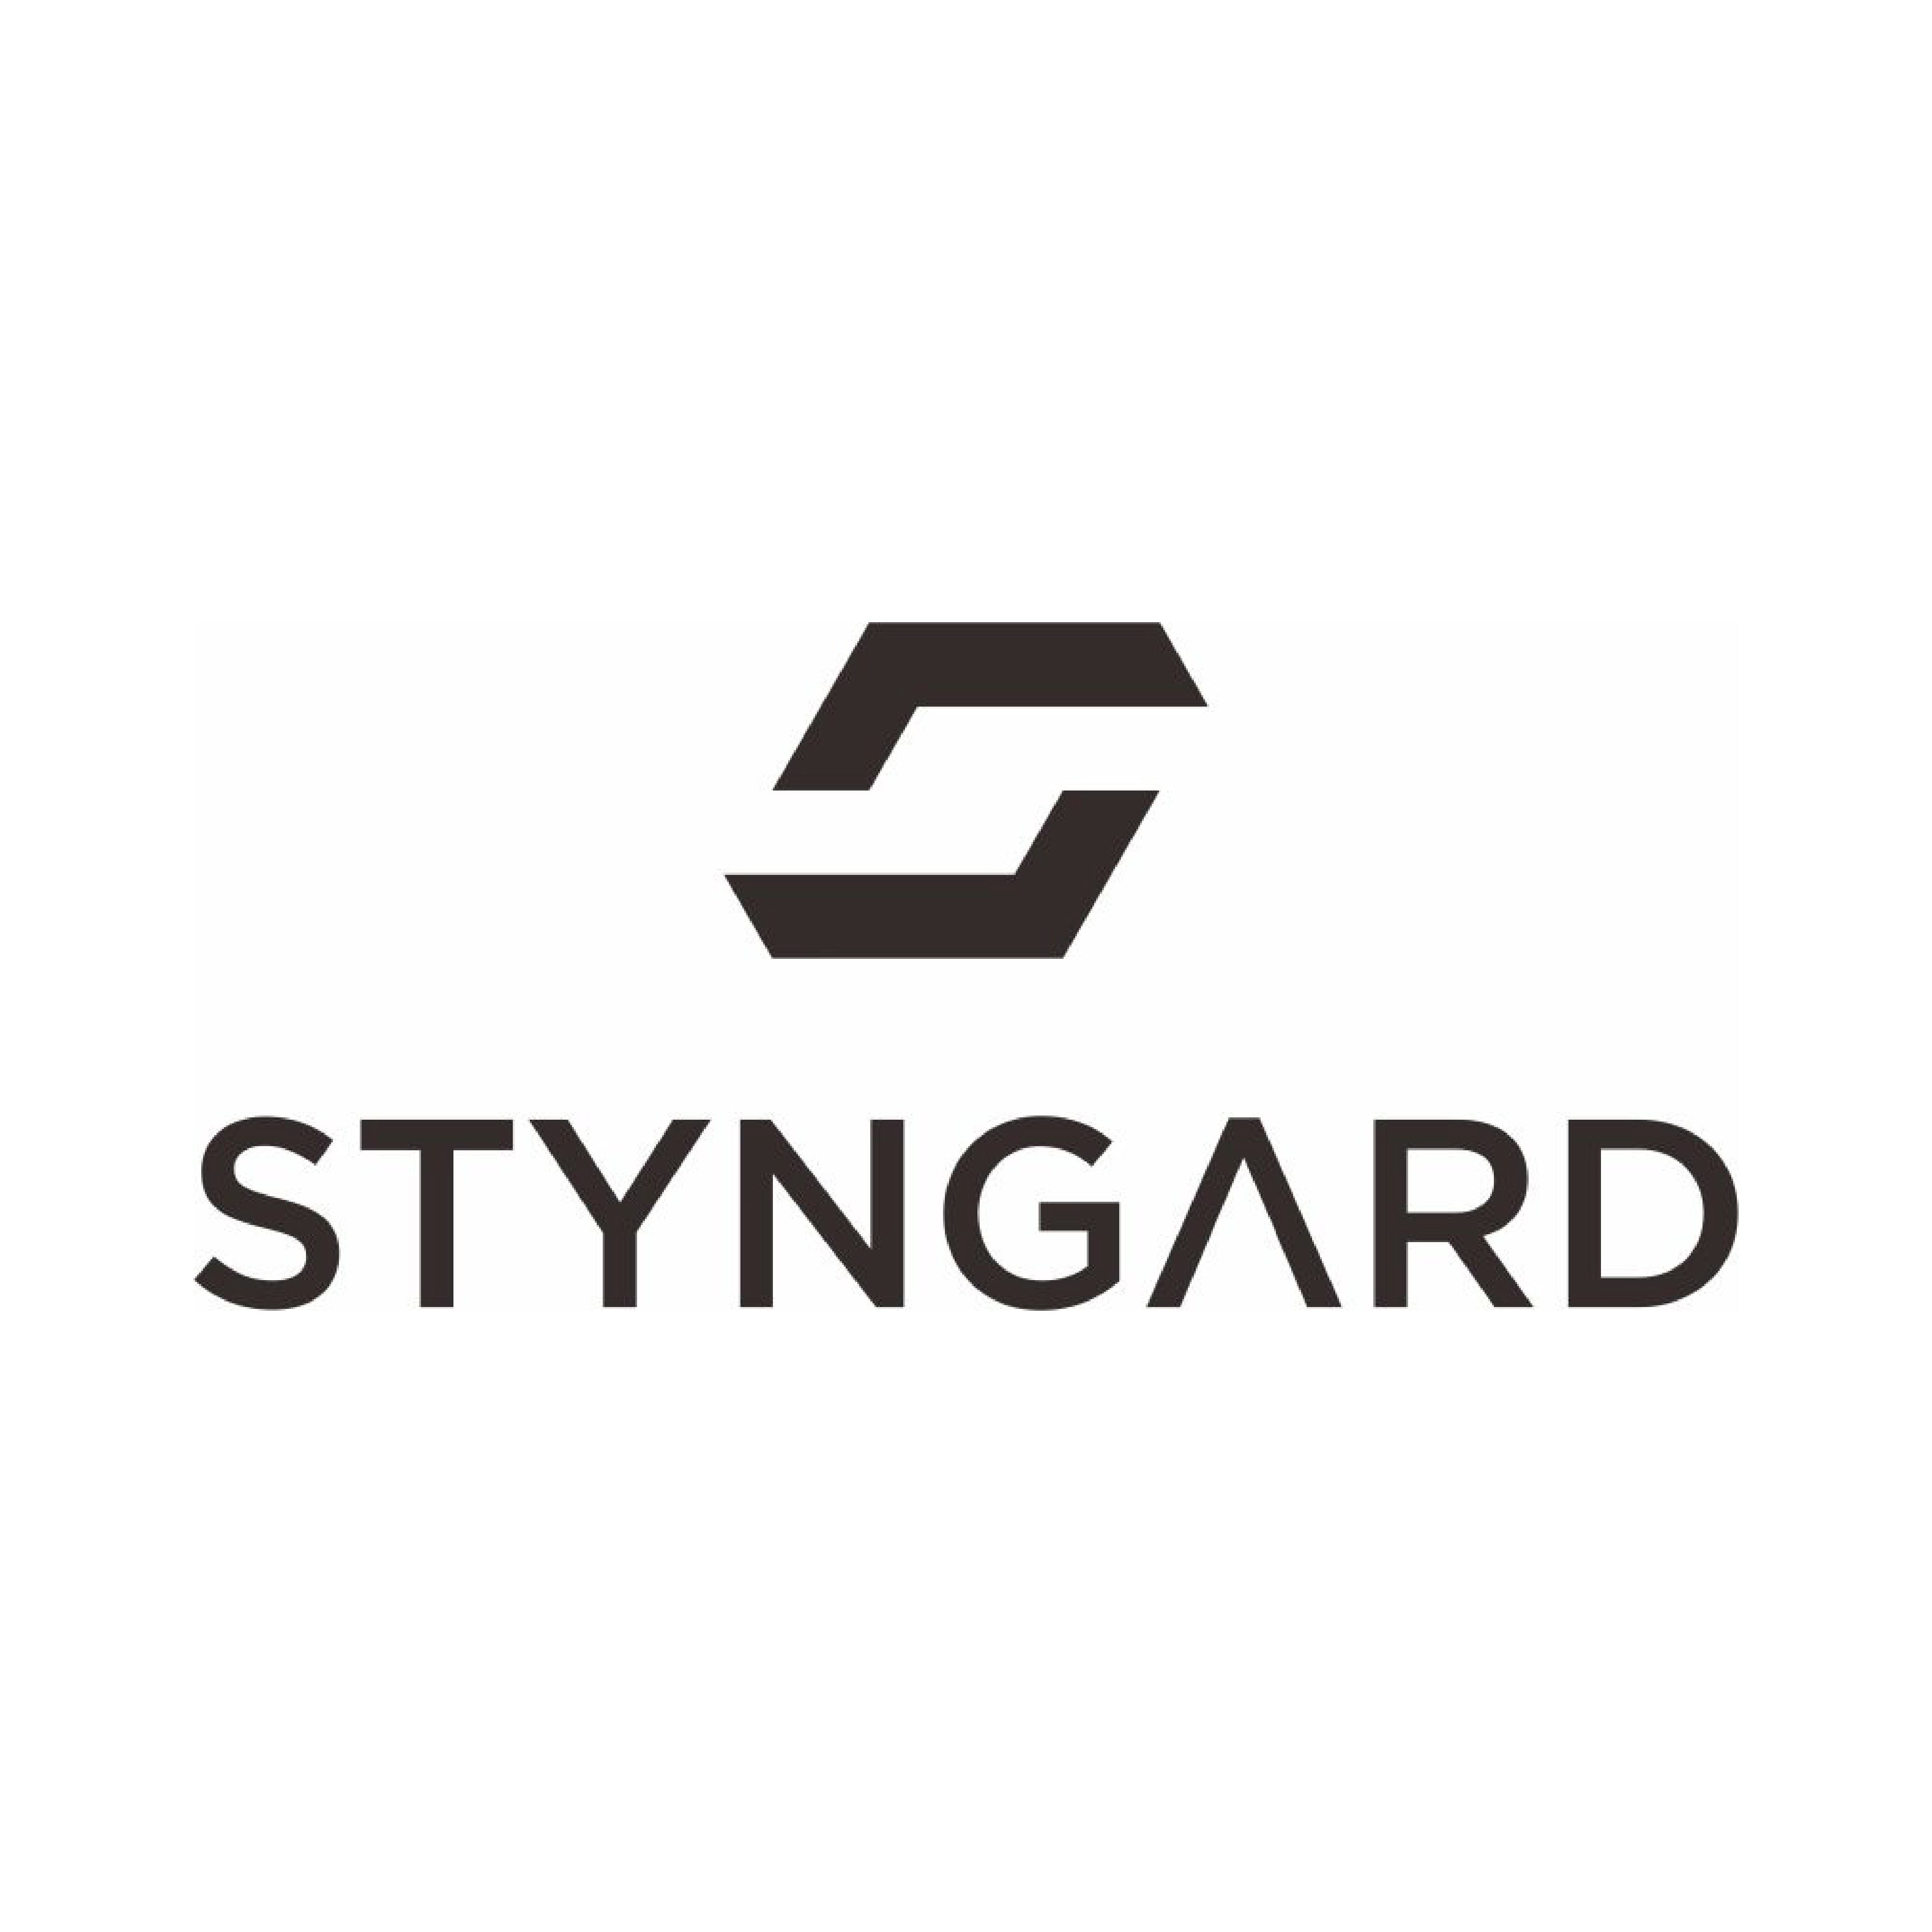 Styngard